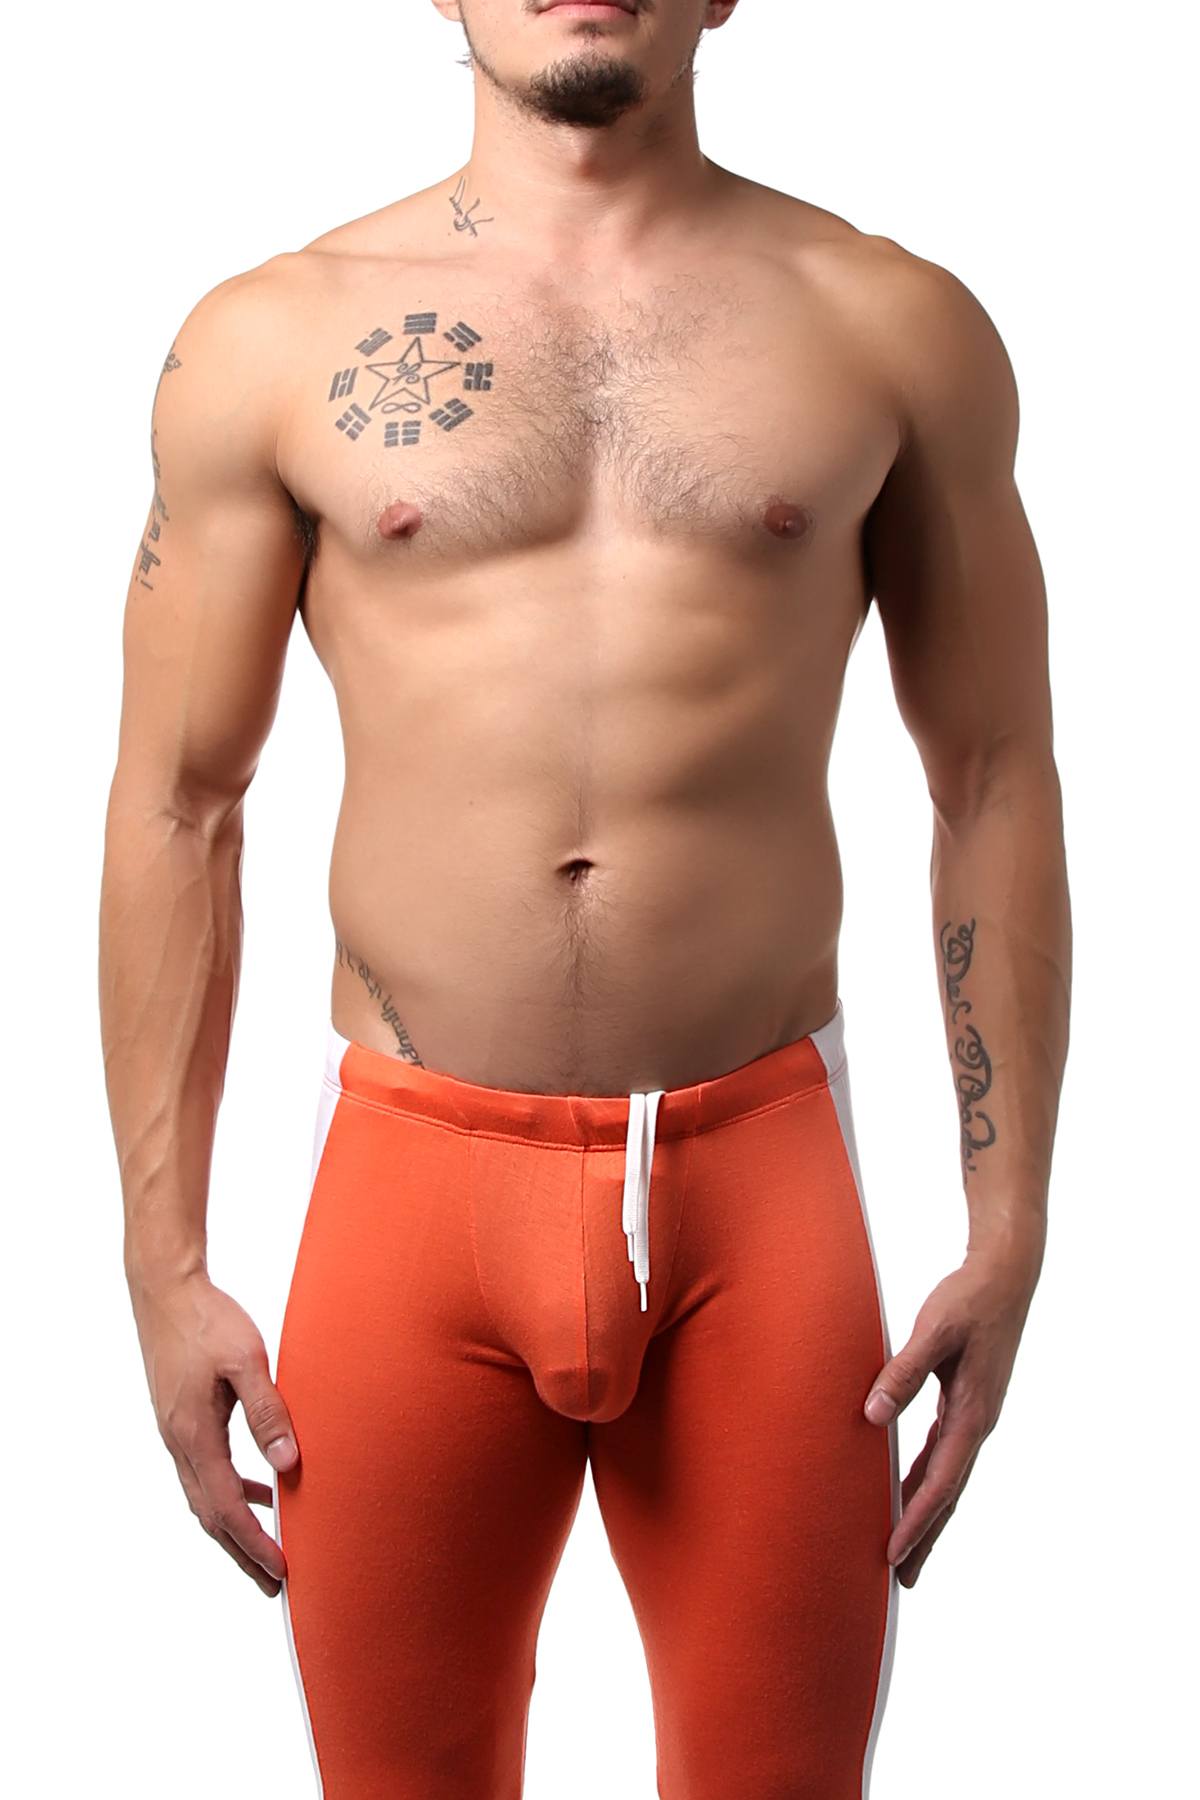 Go Softwear Body 2 Extreme Tights Tangerine 3363 at International Jock